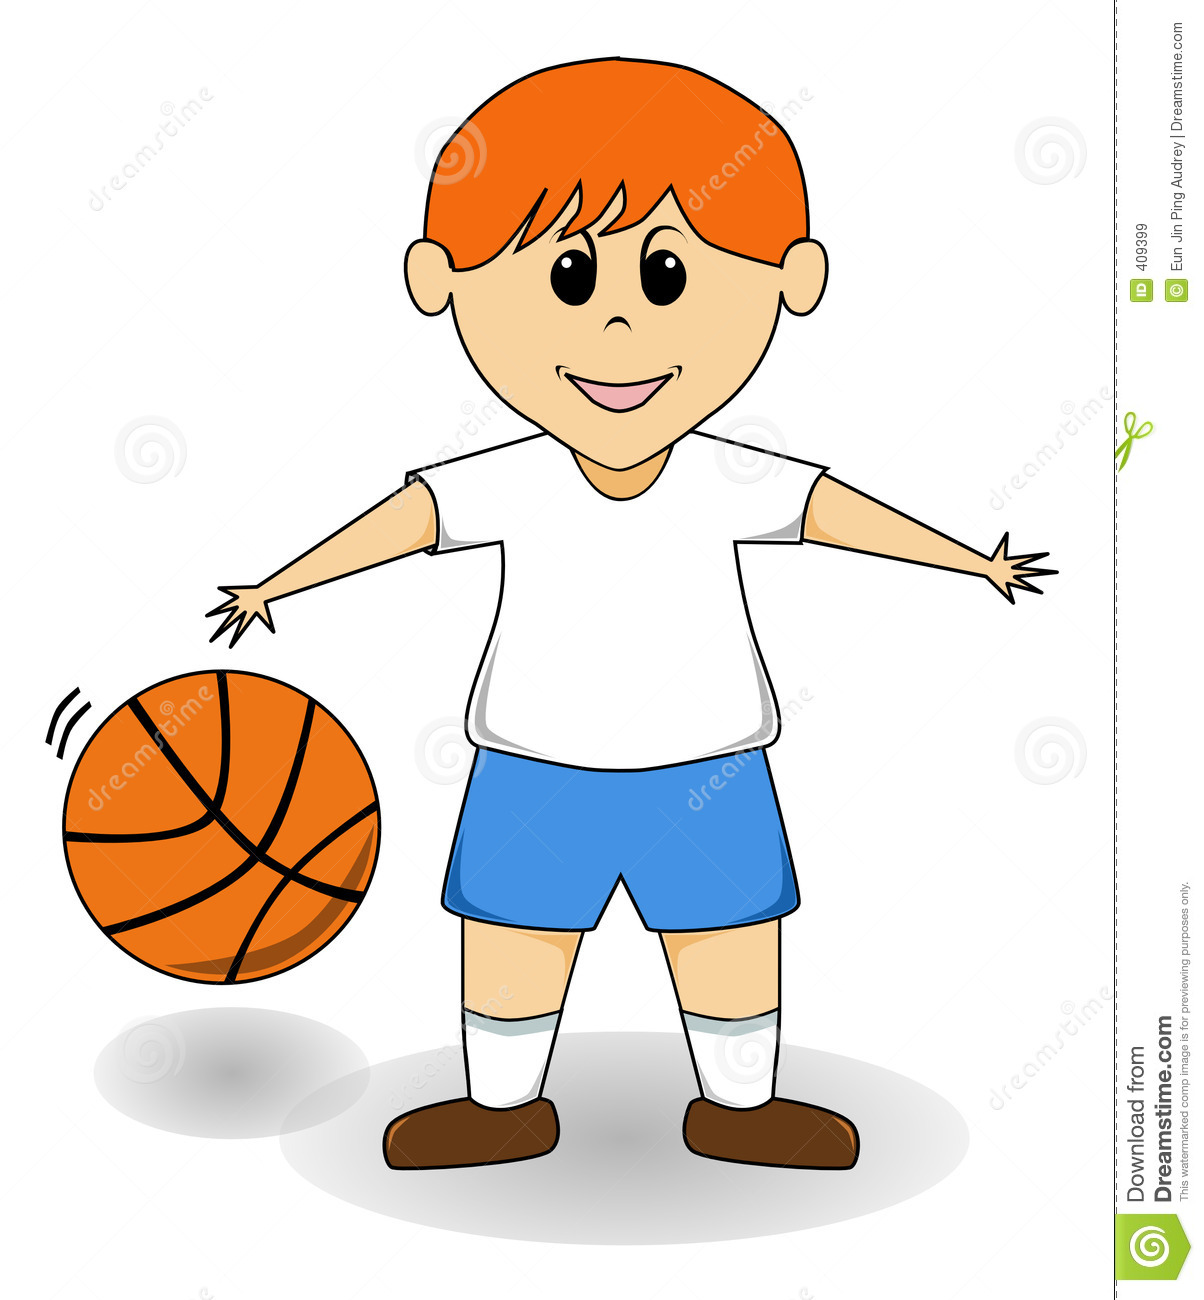 Cartoon Boy   Basketball Royalty Free Stock Images   Image  409399